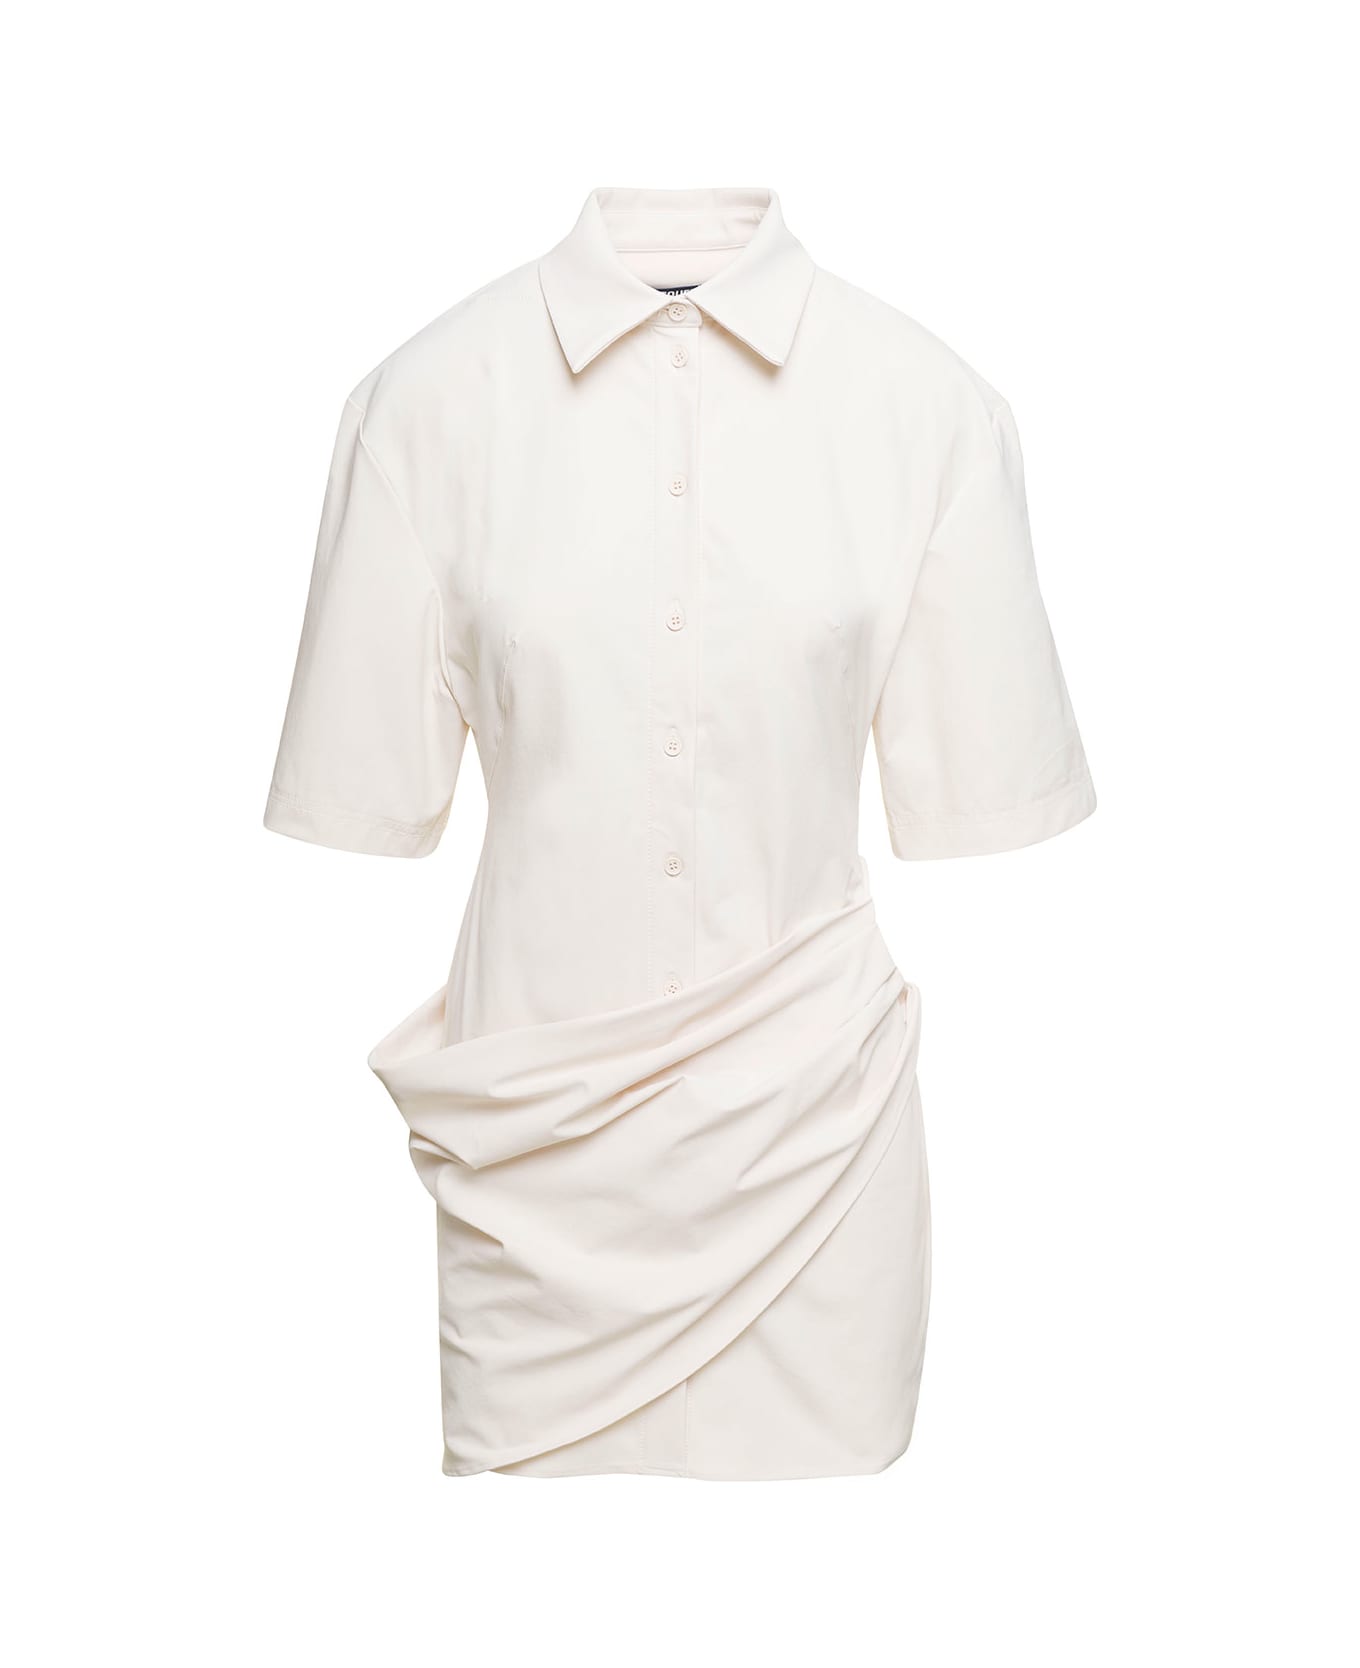 Jacquemus White Shirt Dress La Robe Camisa In Cotton Blend Woman - White ワンピース＆ドレス